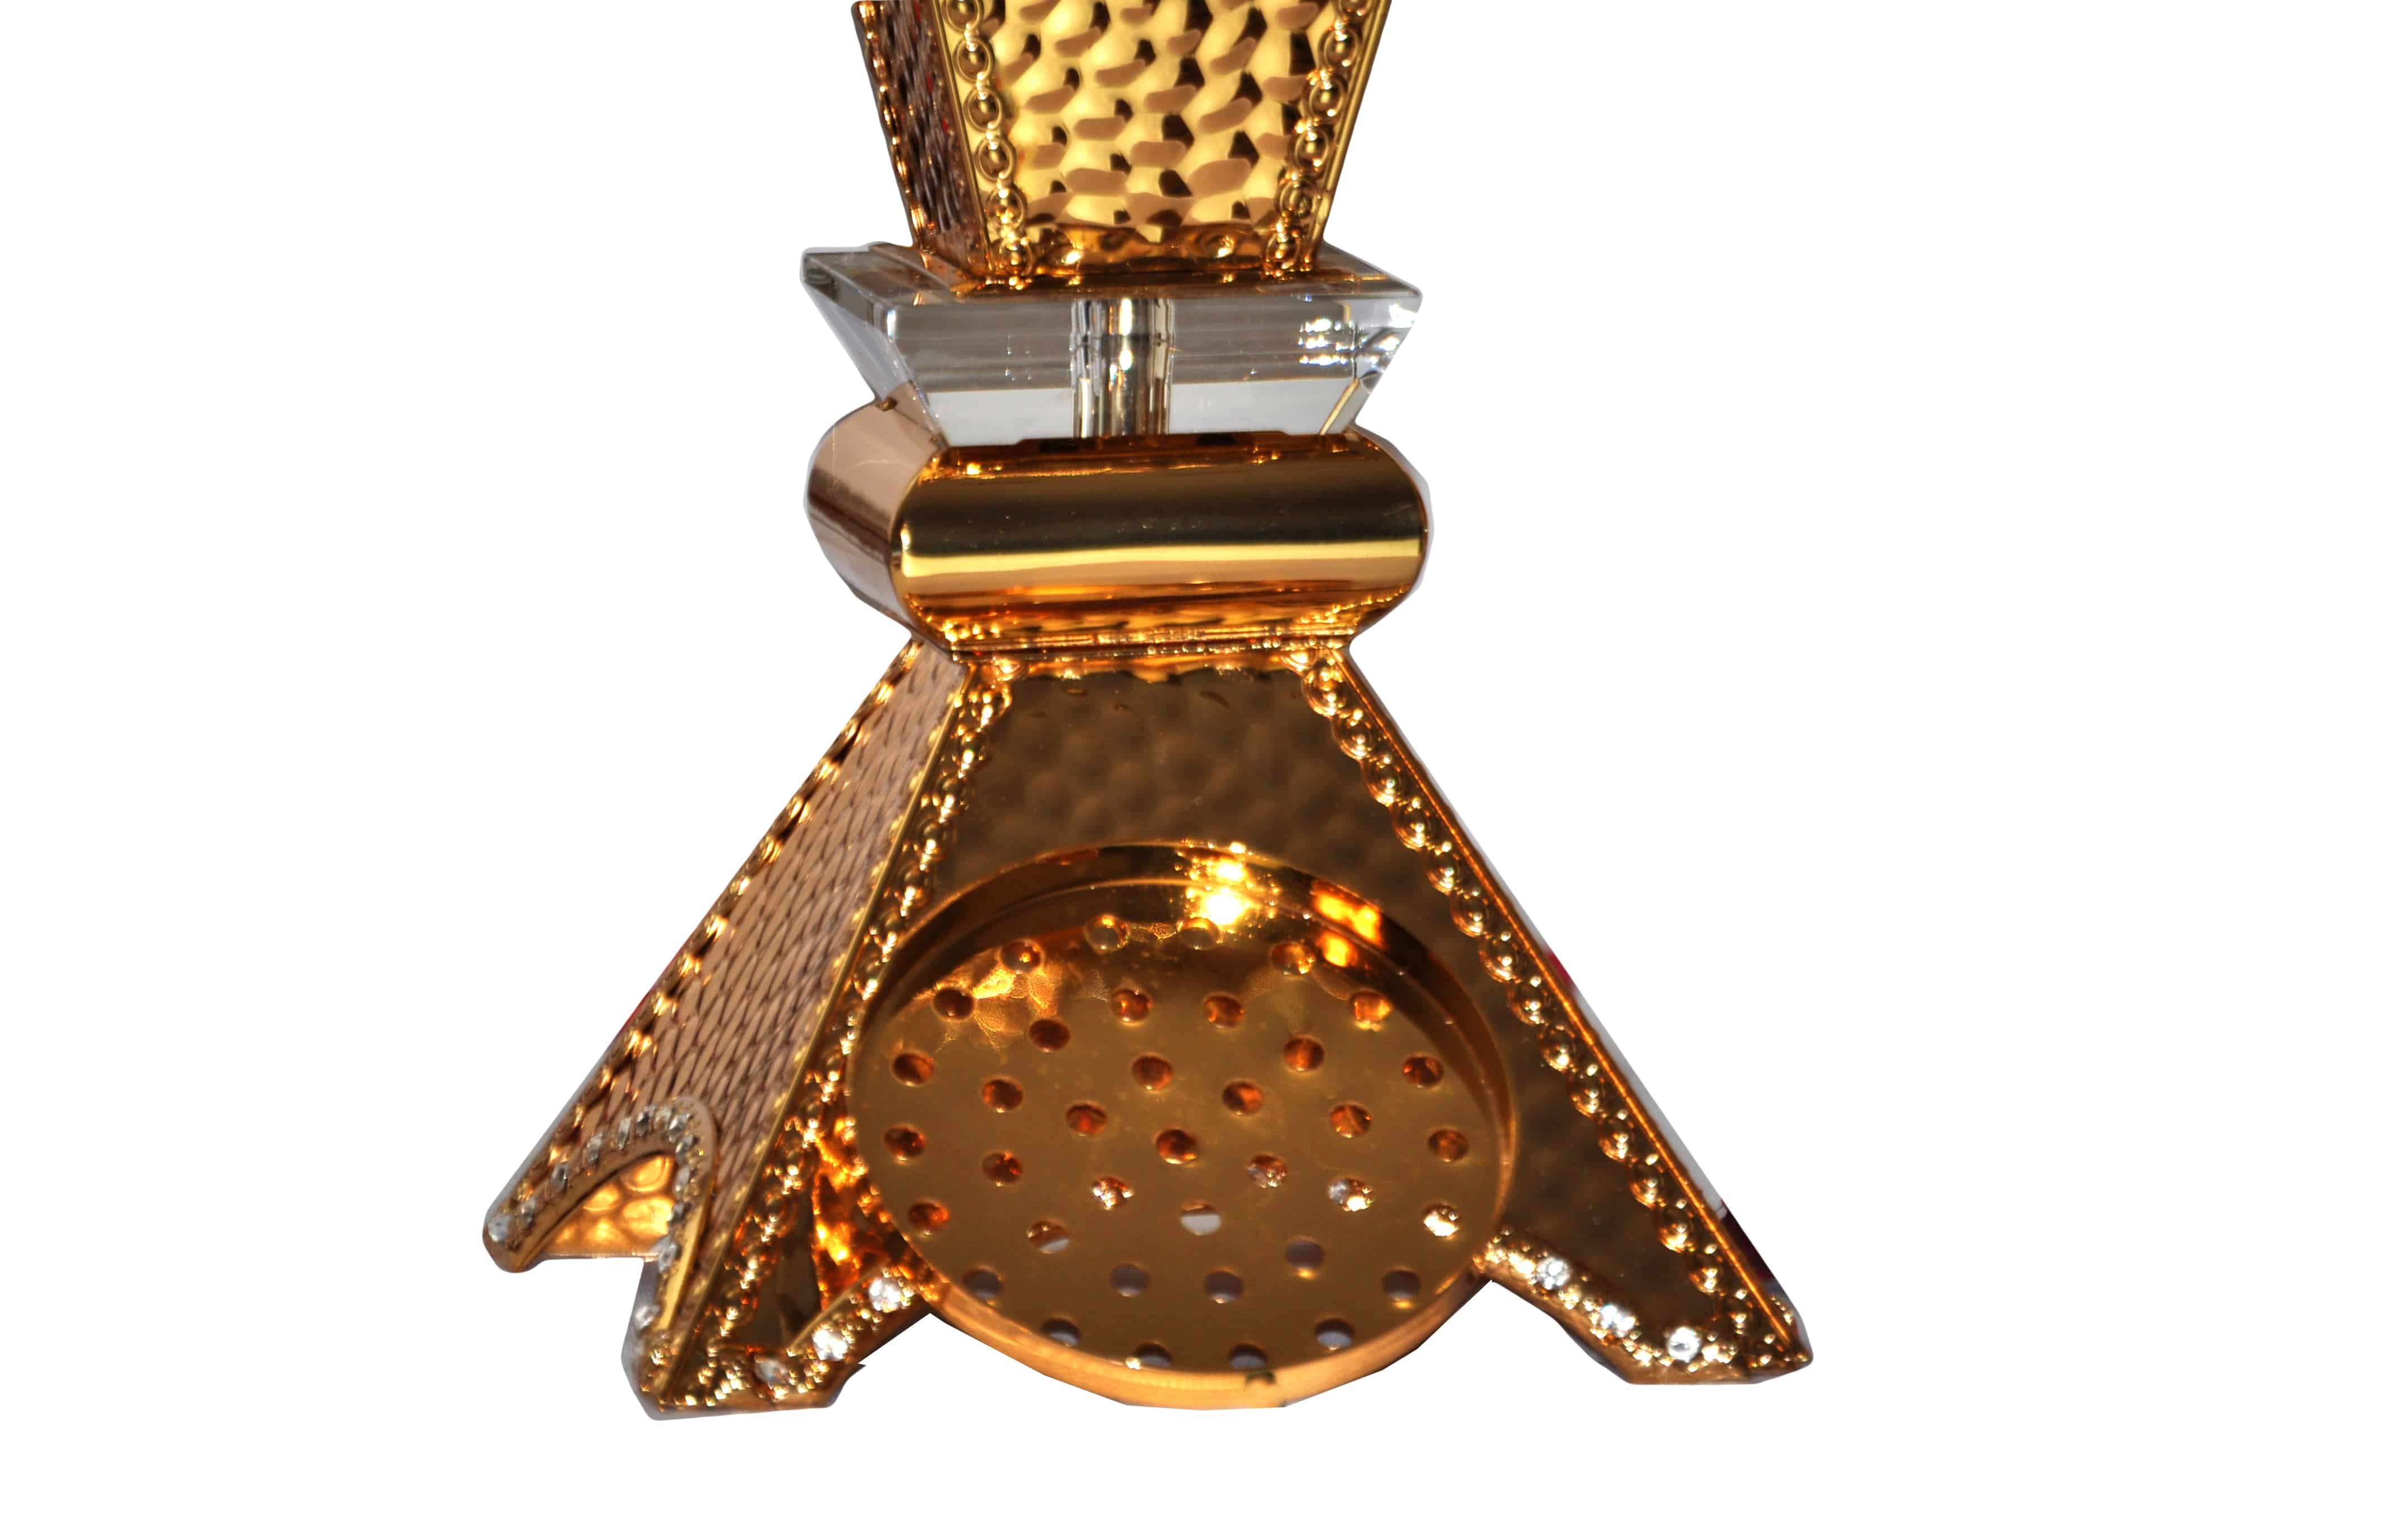 Arab Incense Bakhoor Burner - 15 inch Golden by Intense Oud - Intense oud